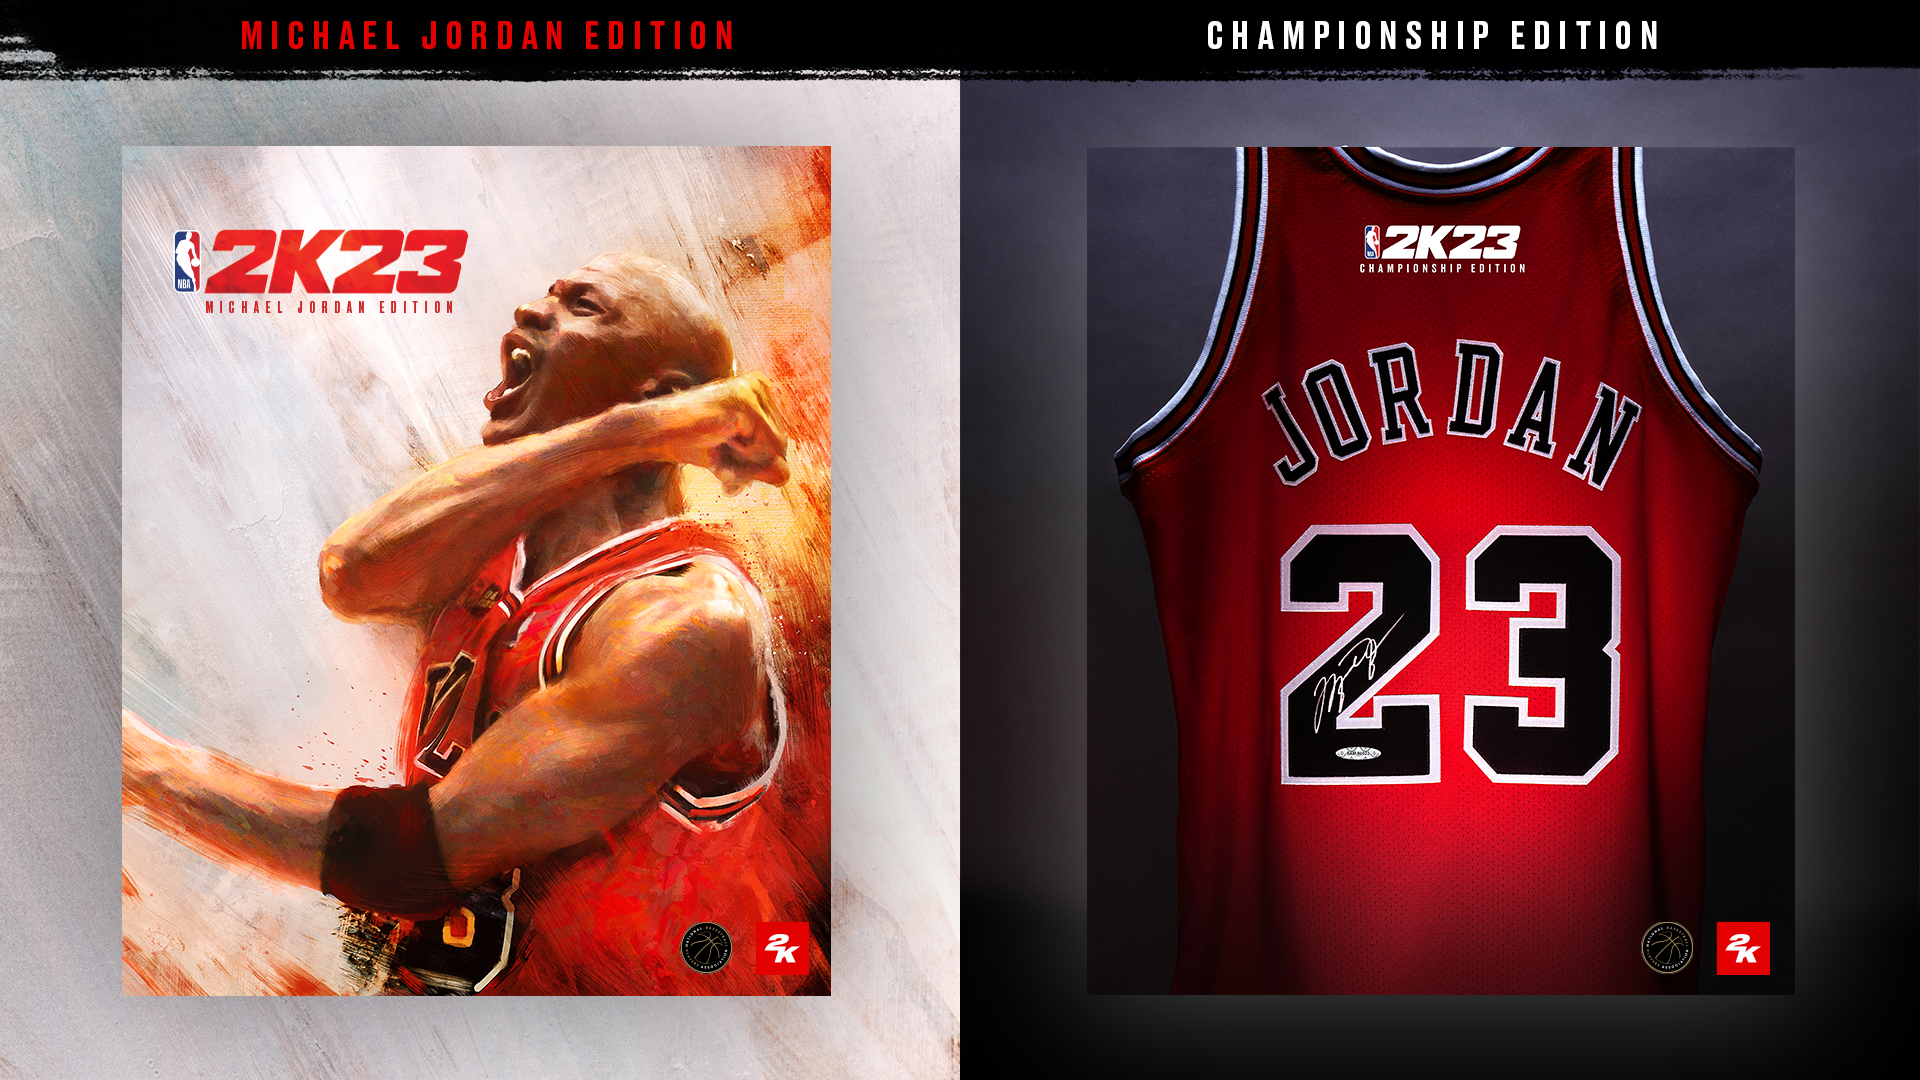 Jaquettes des éditions spéciales Michael Jordan de NBA 2K23. 